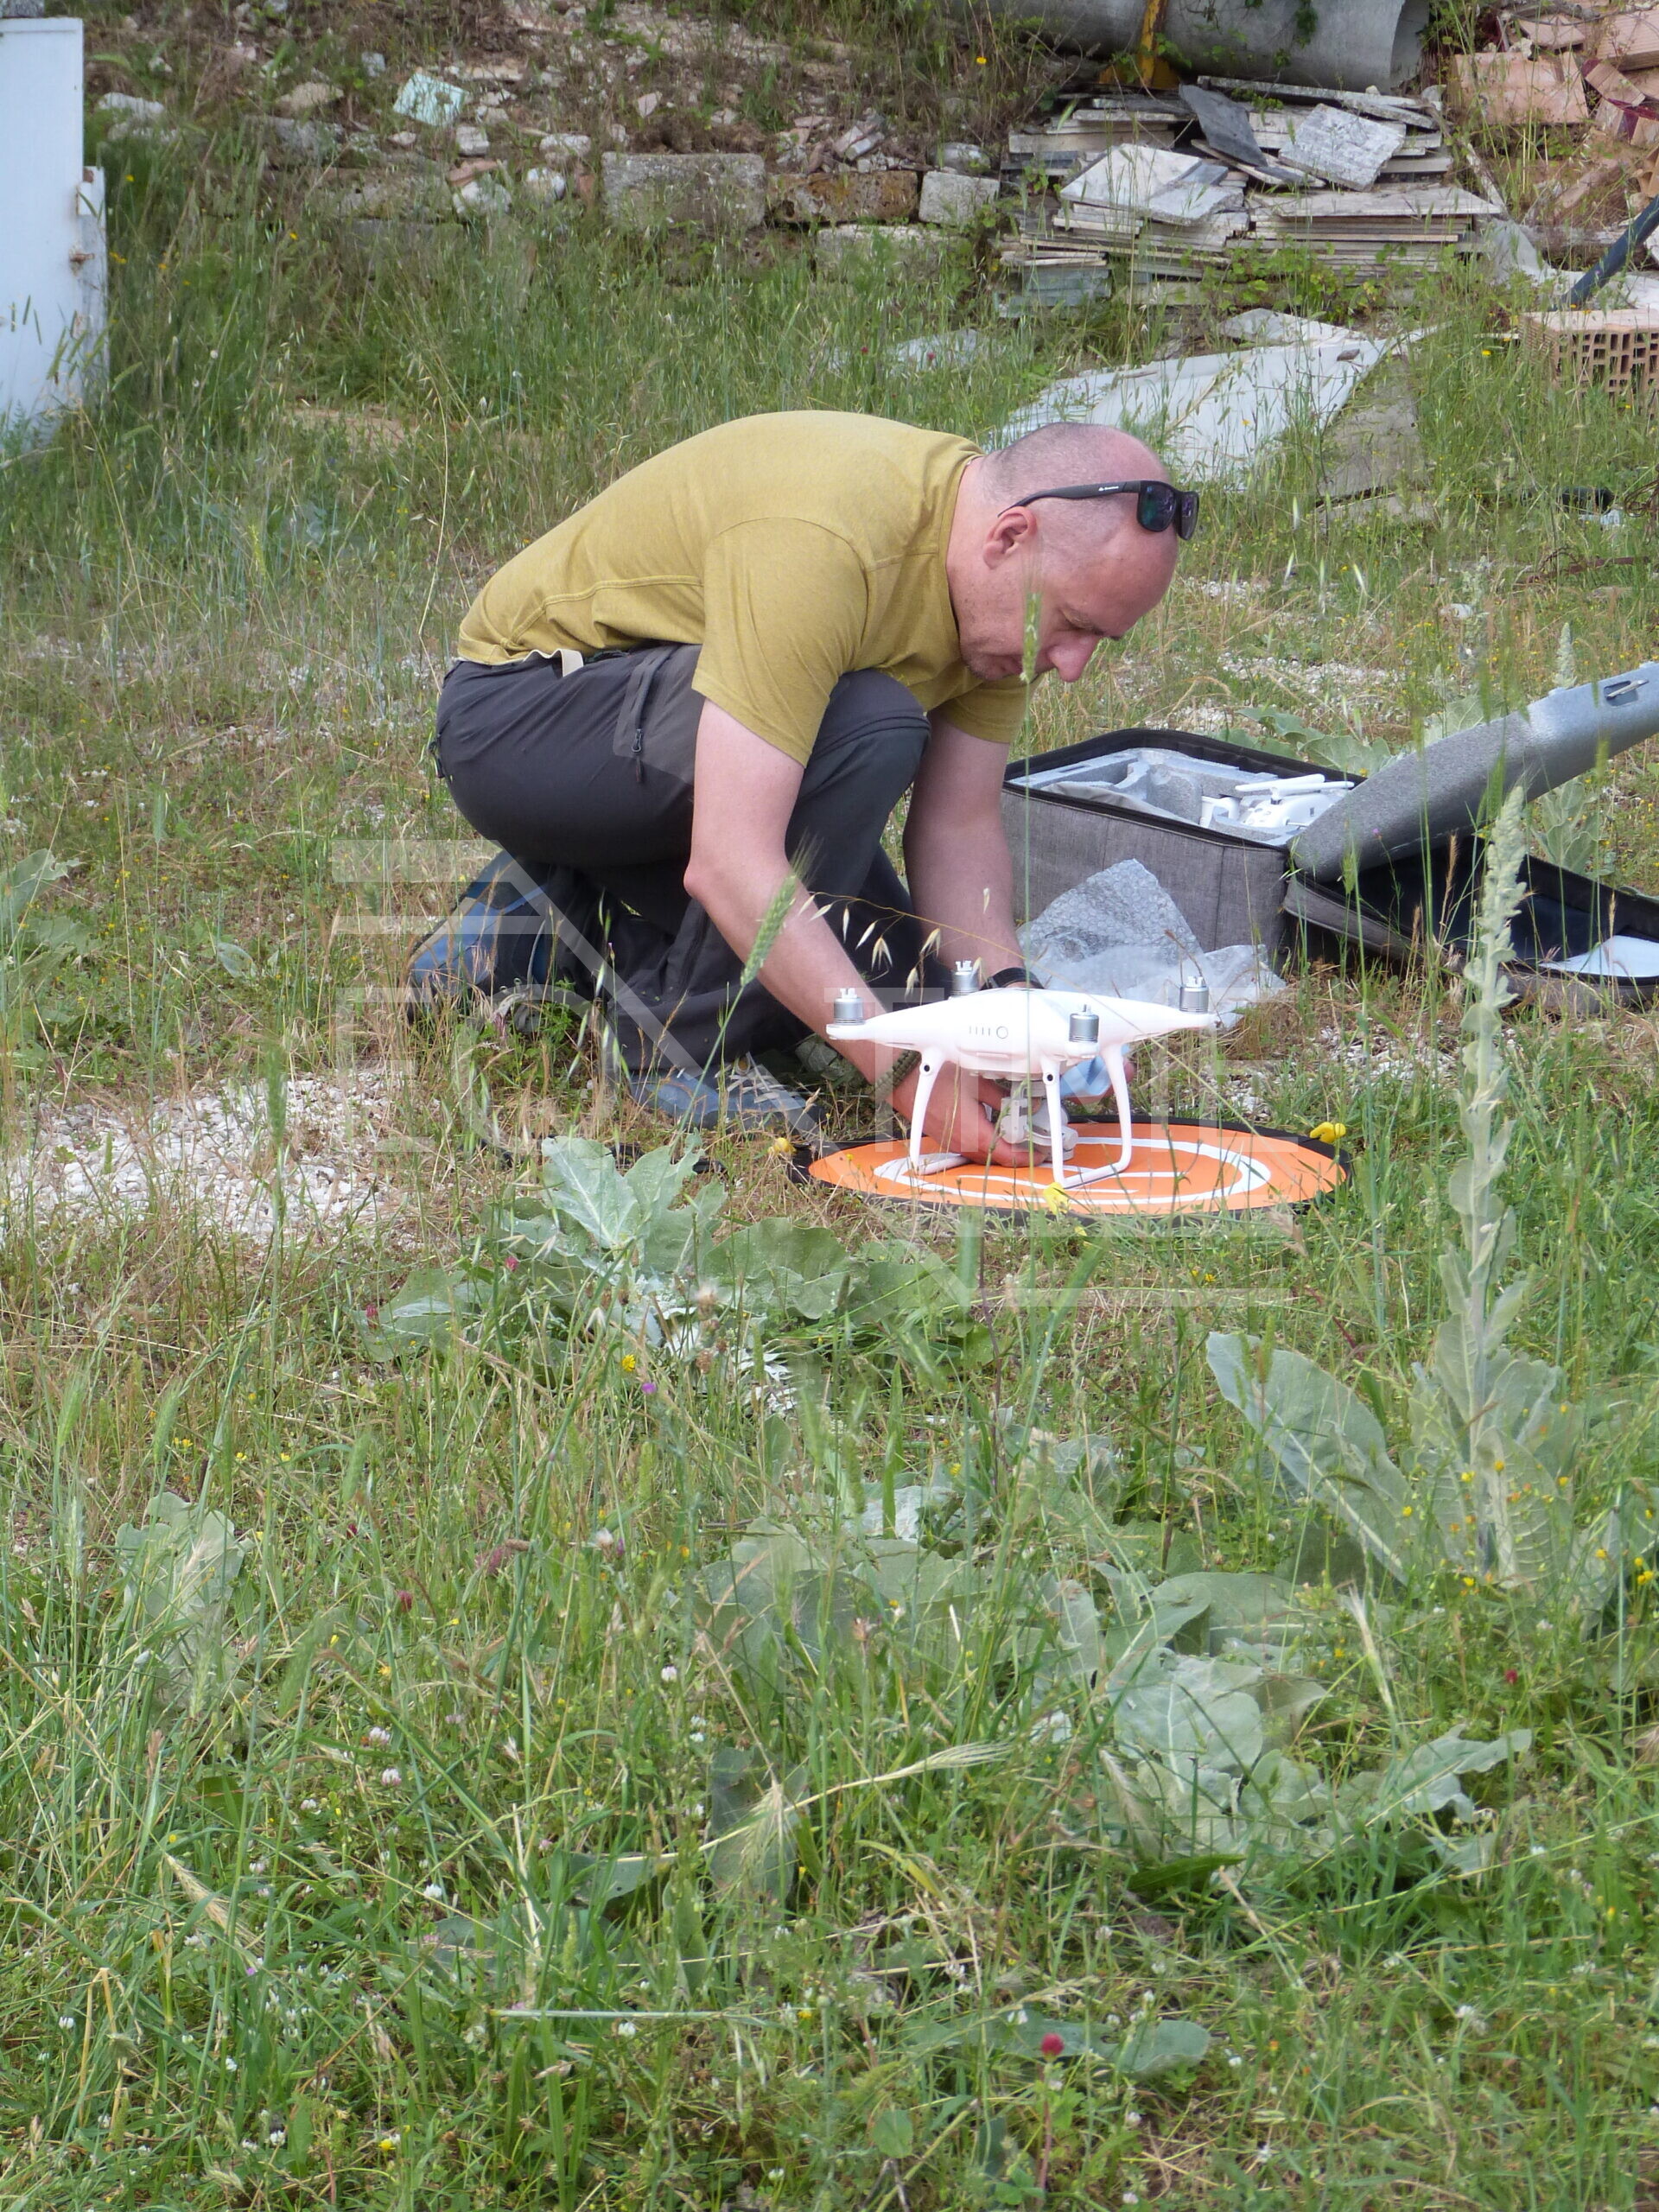 Preparation of the drone flight